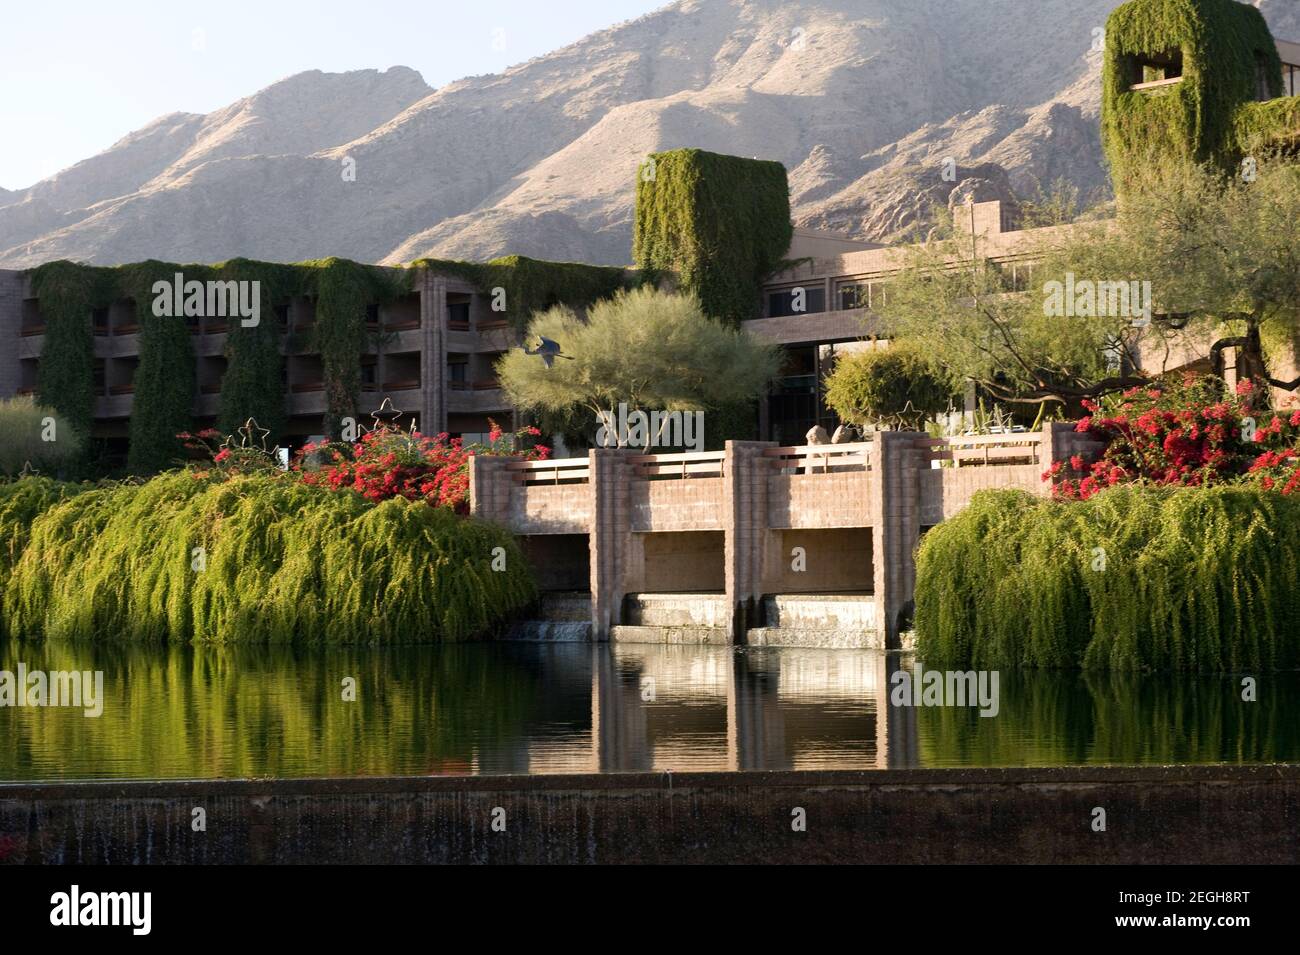 Loews Ventana Canyon Resort.  An exclusive golf resort near Tucson, Arizona Stock Photo